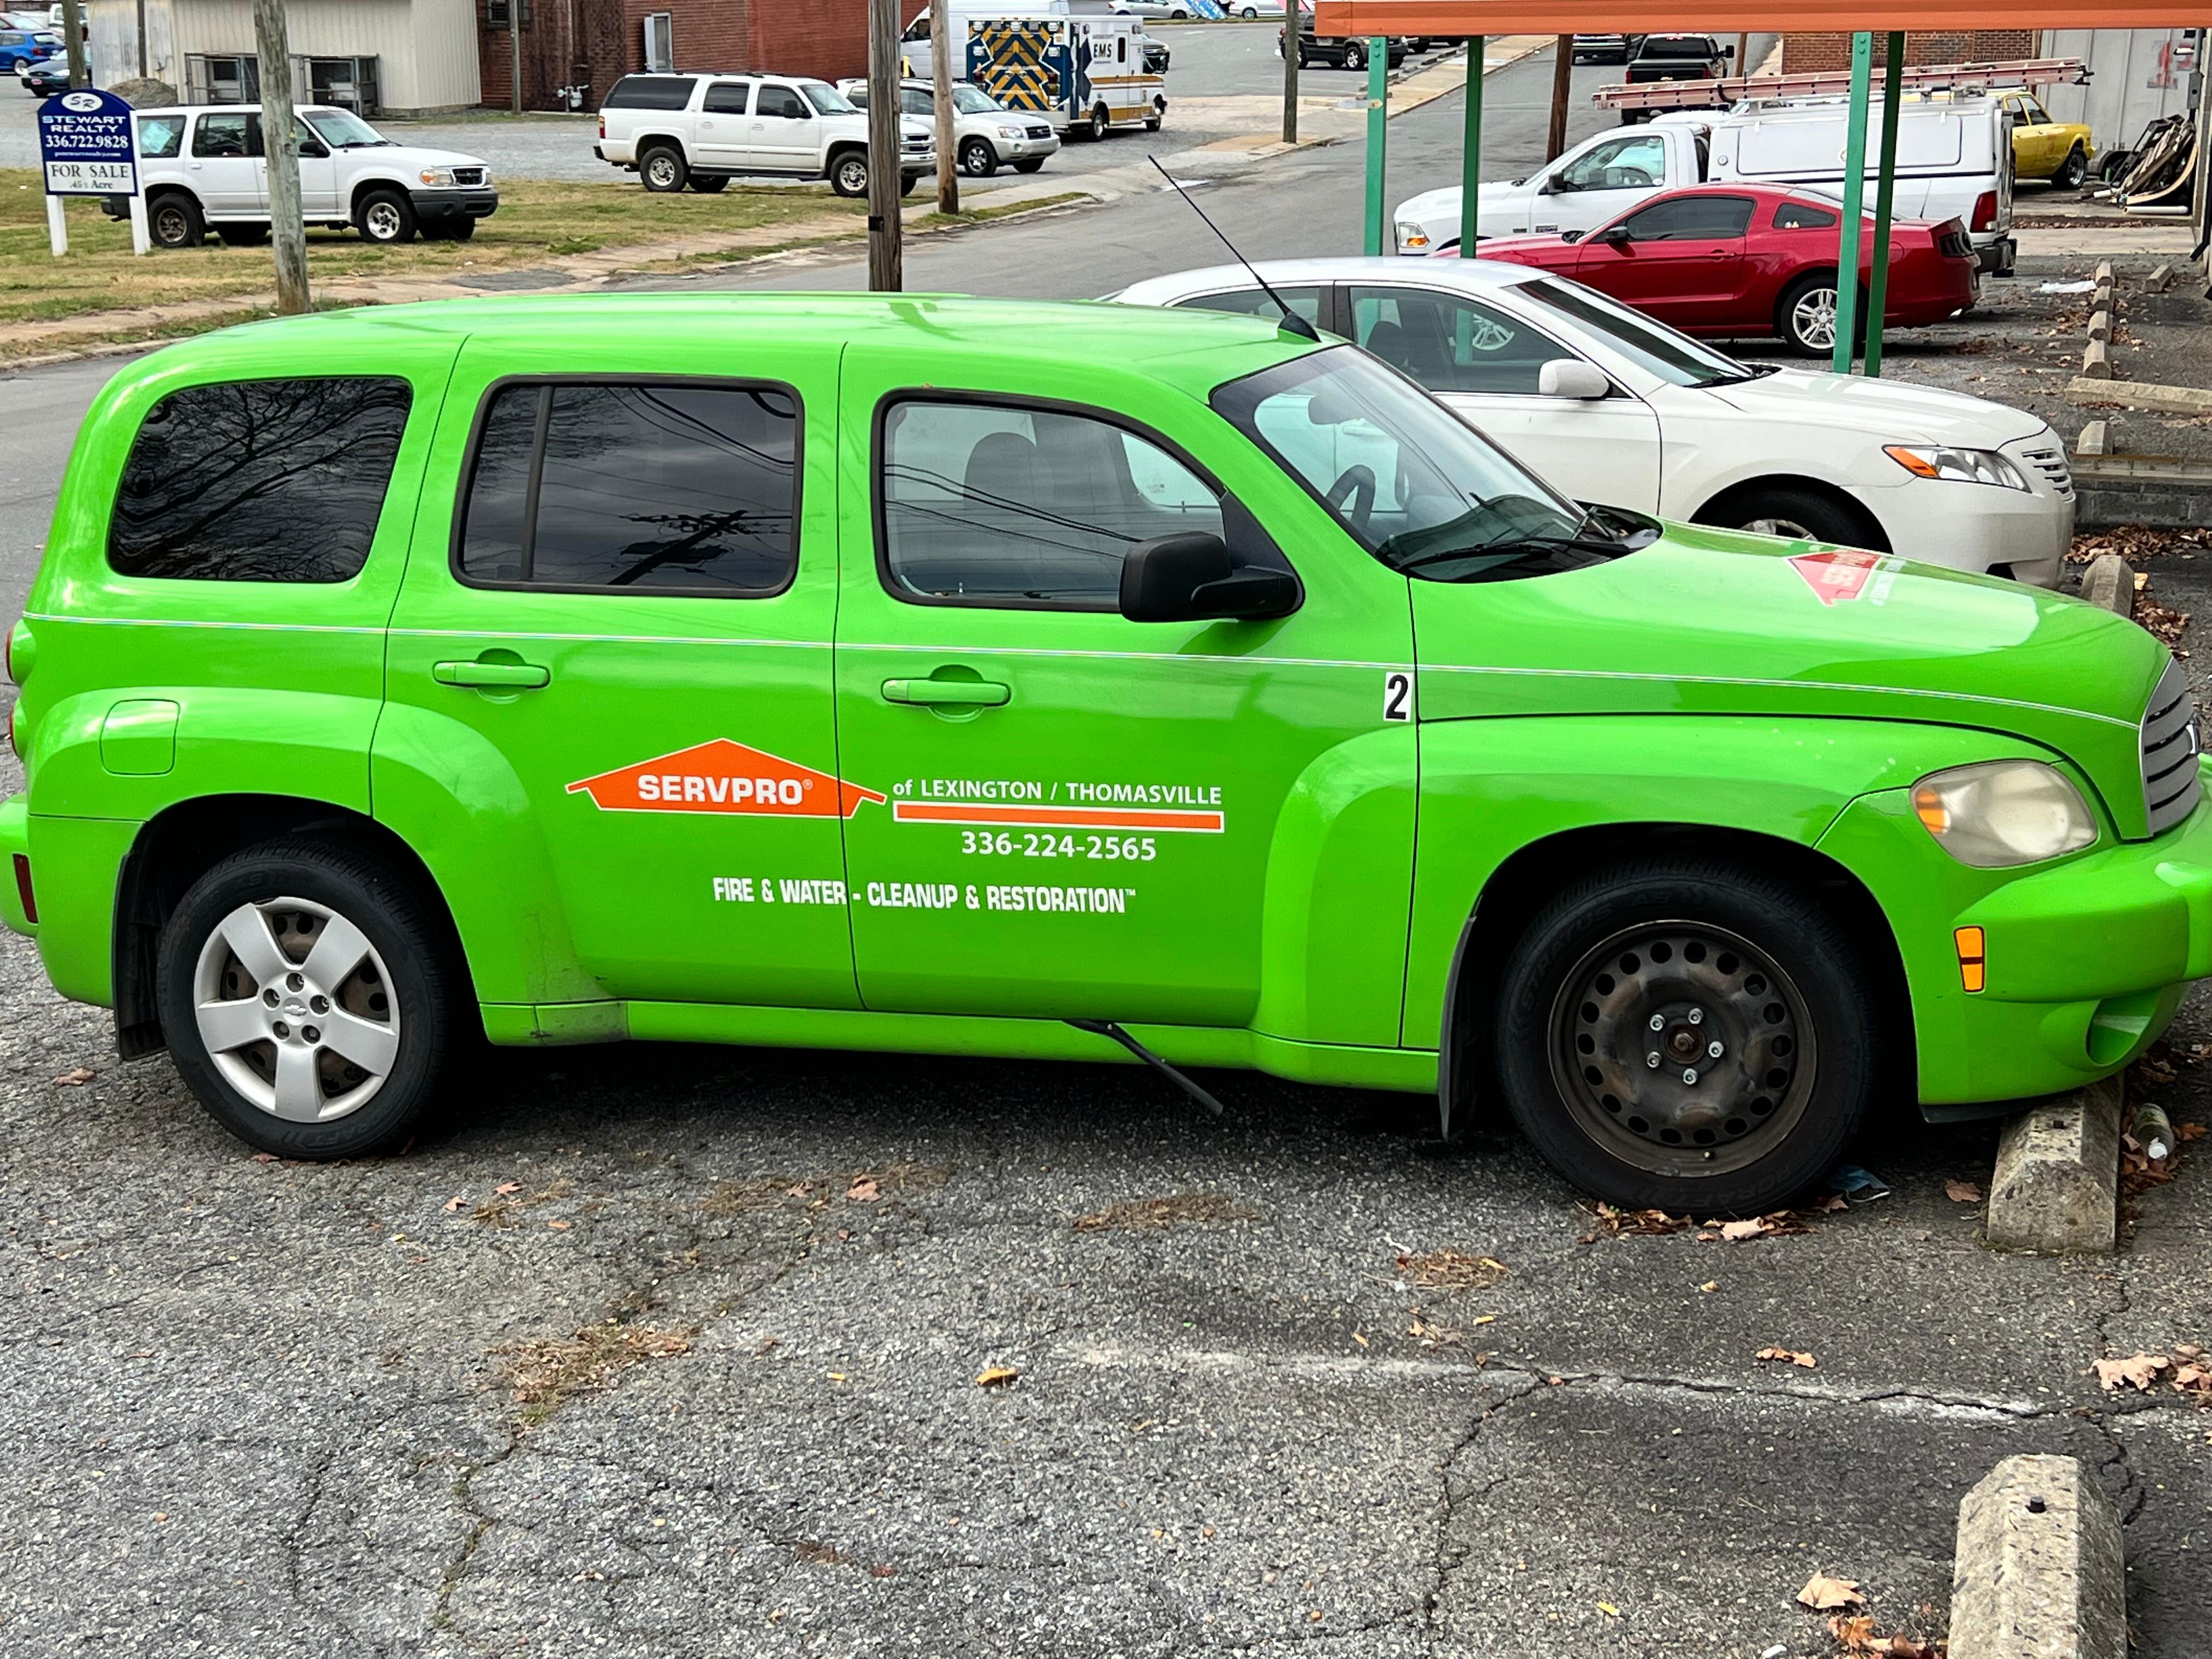 SERVPRO Chevy HHR: marketing car.